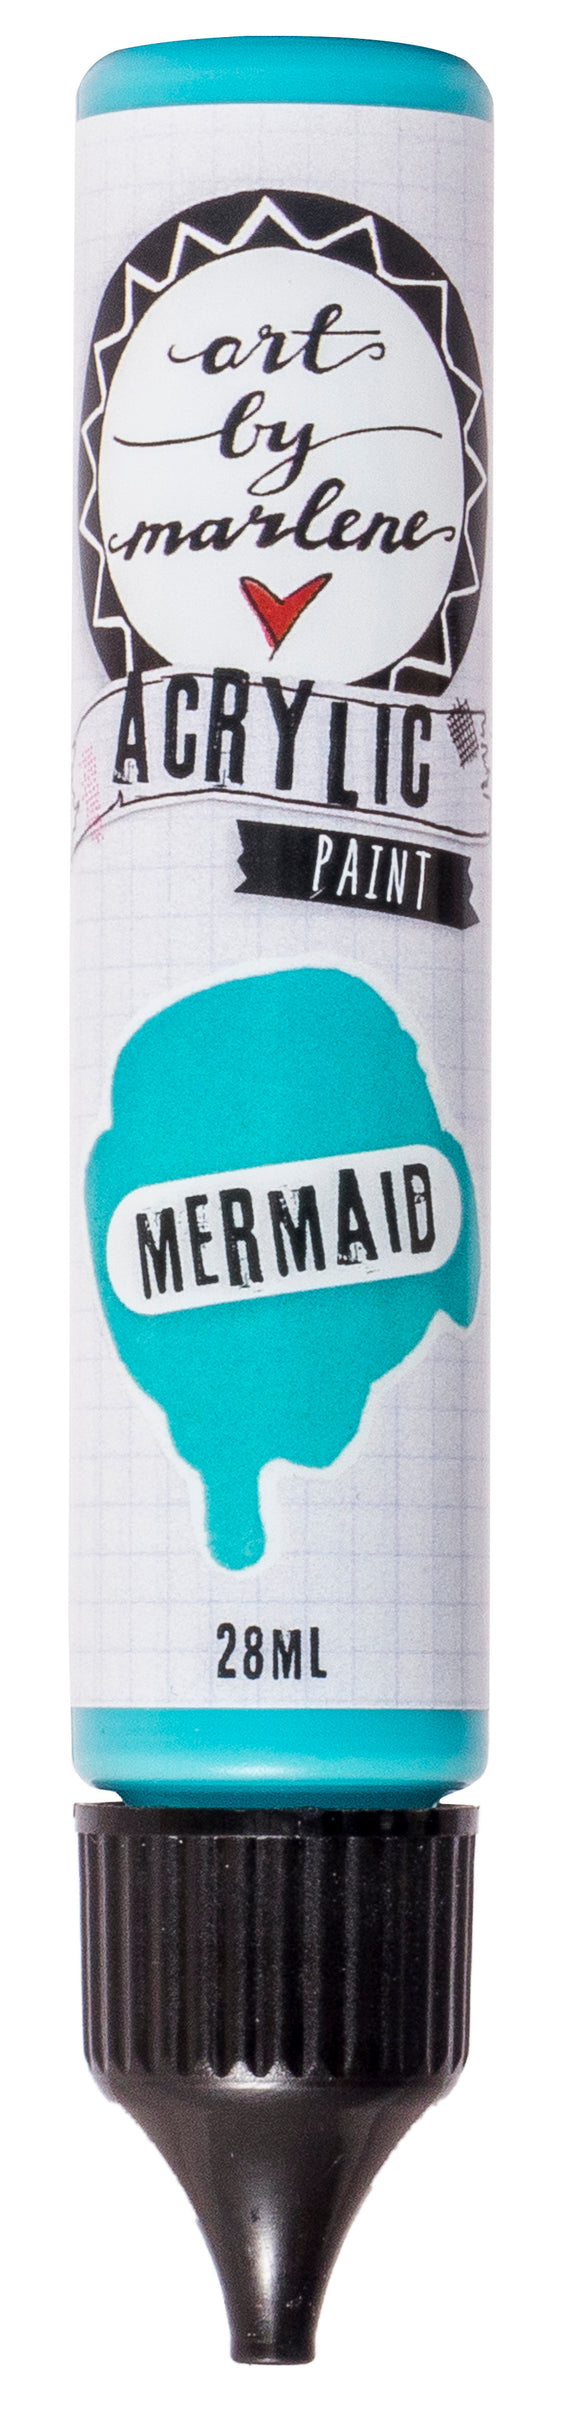 Acrylic Paint - Mermaid : (ABM) ACP4